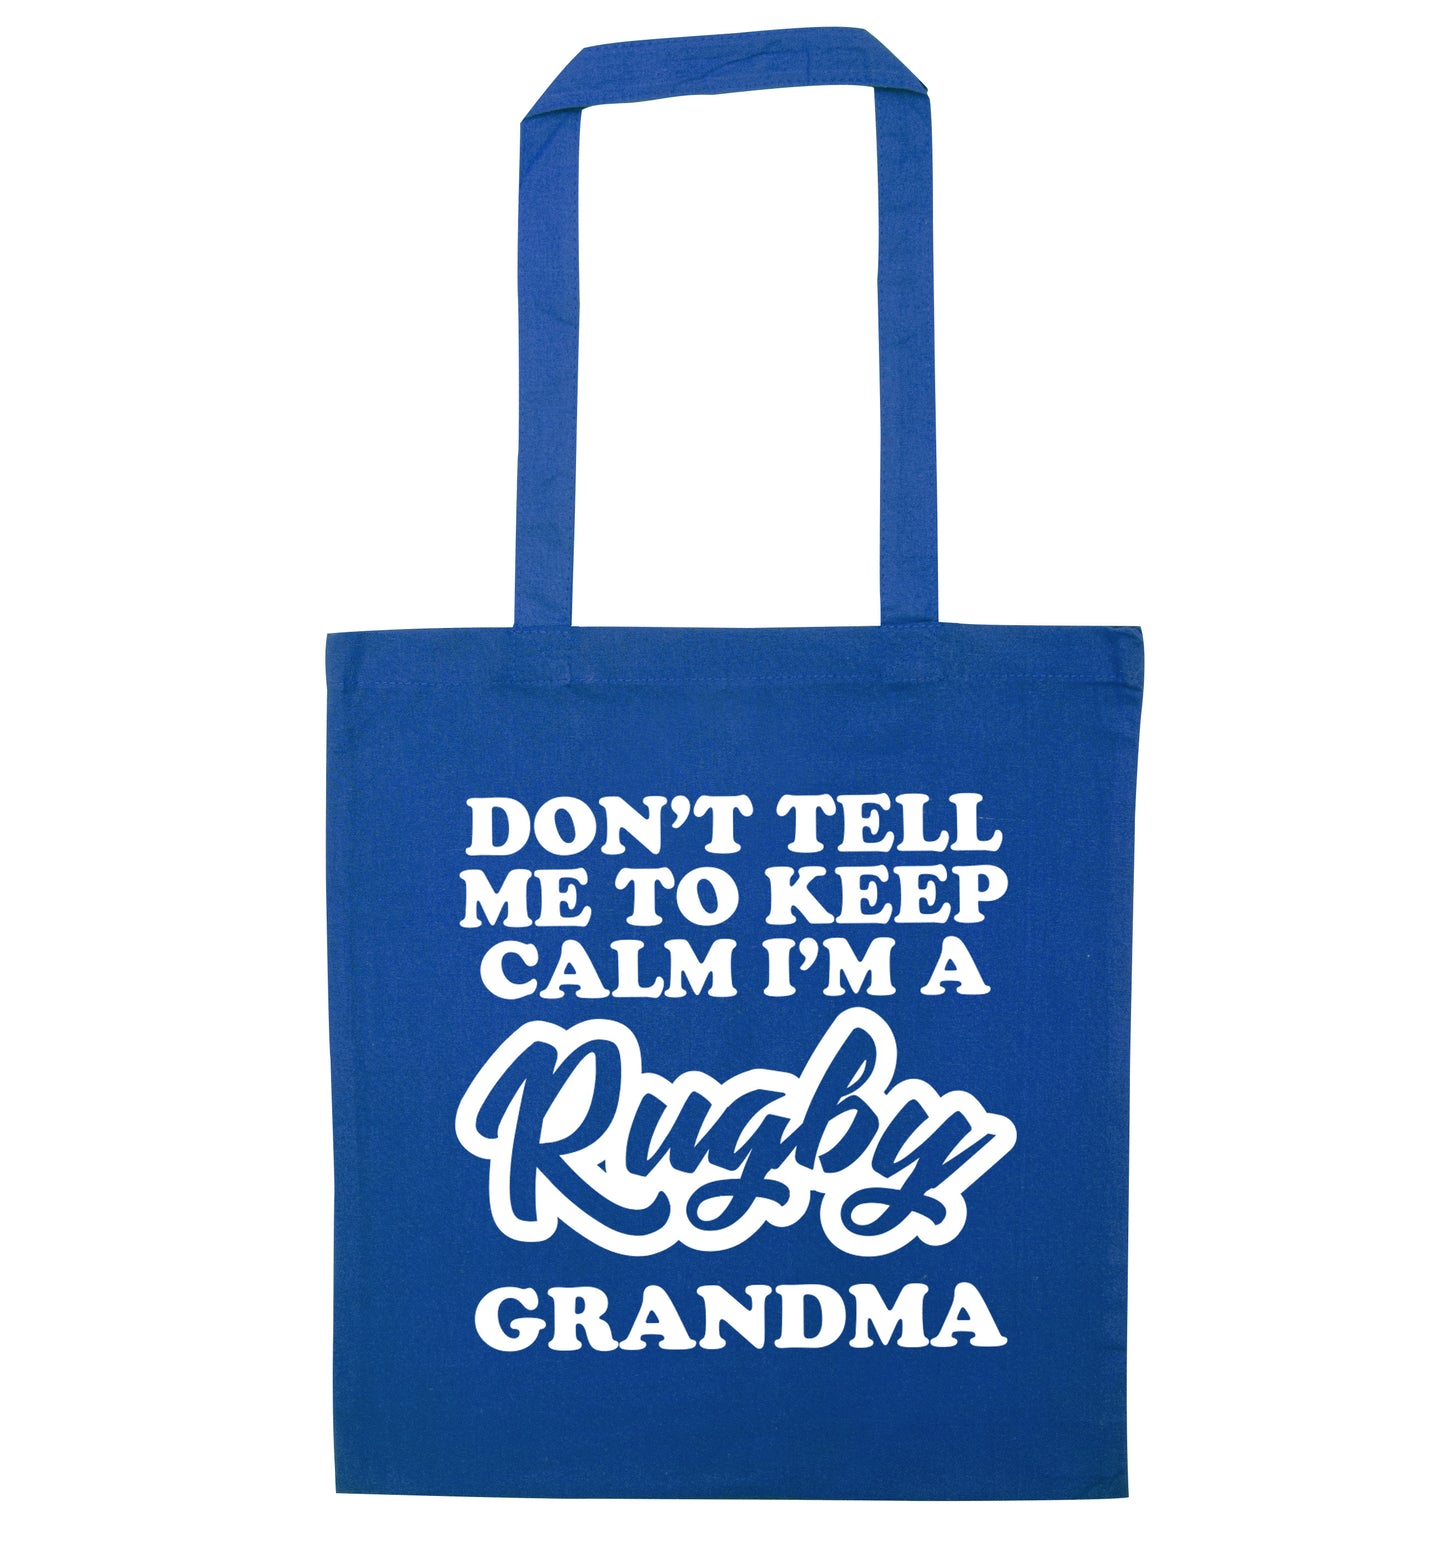 Don't tell me to keep calm I'm a rugby grandma blue tote bag